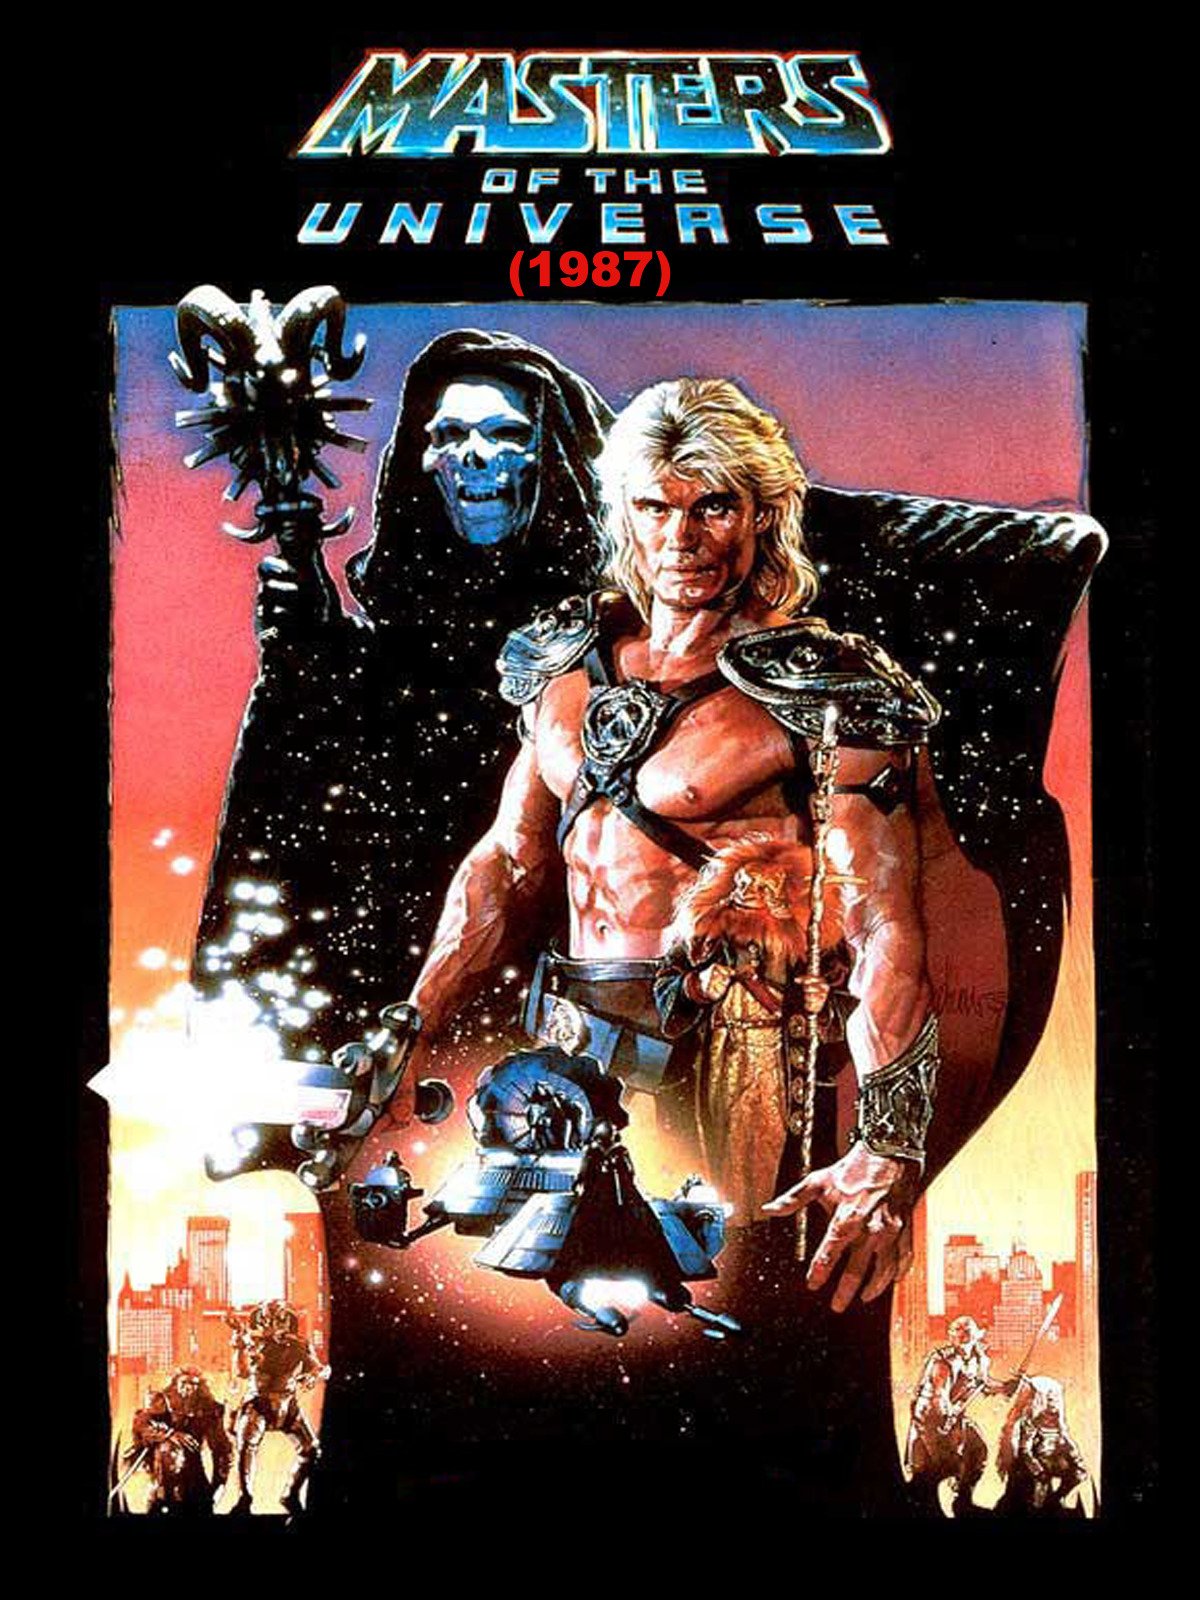 Filmplakat zu Master of the Universe